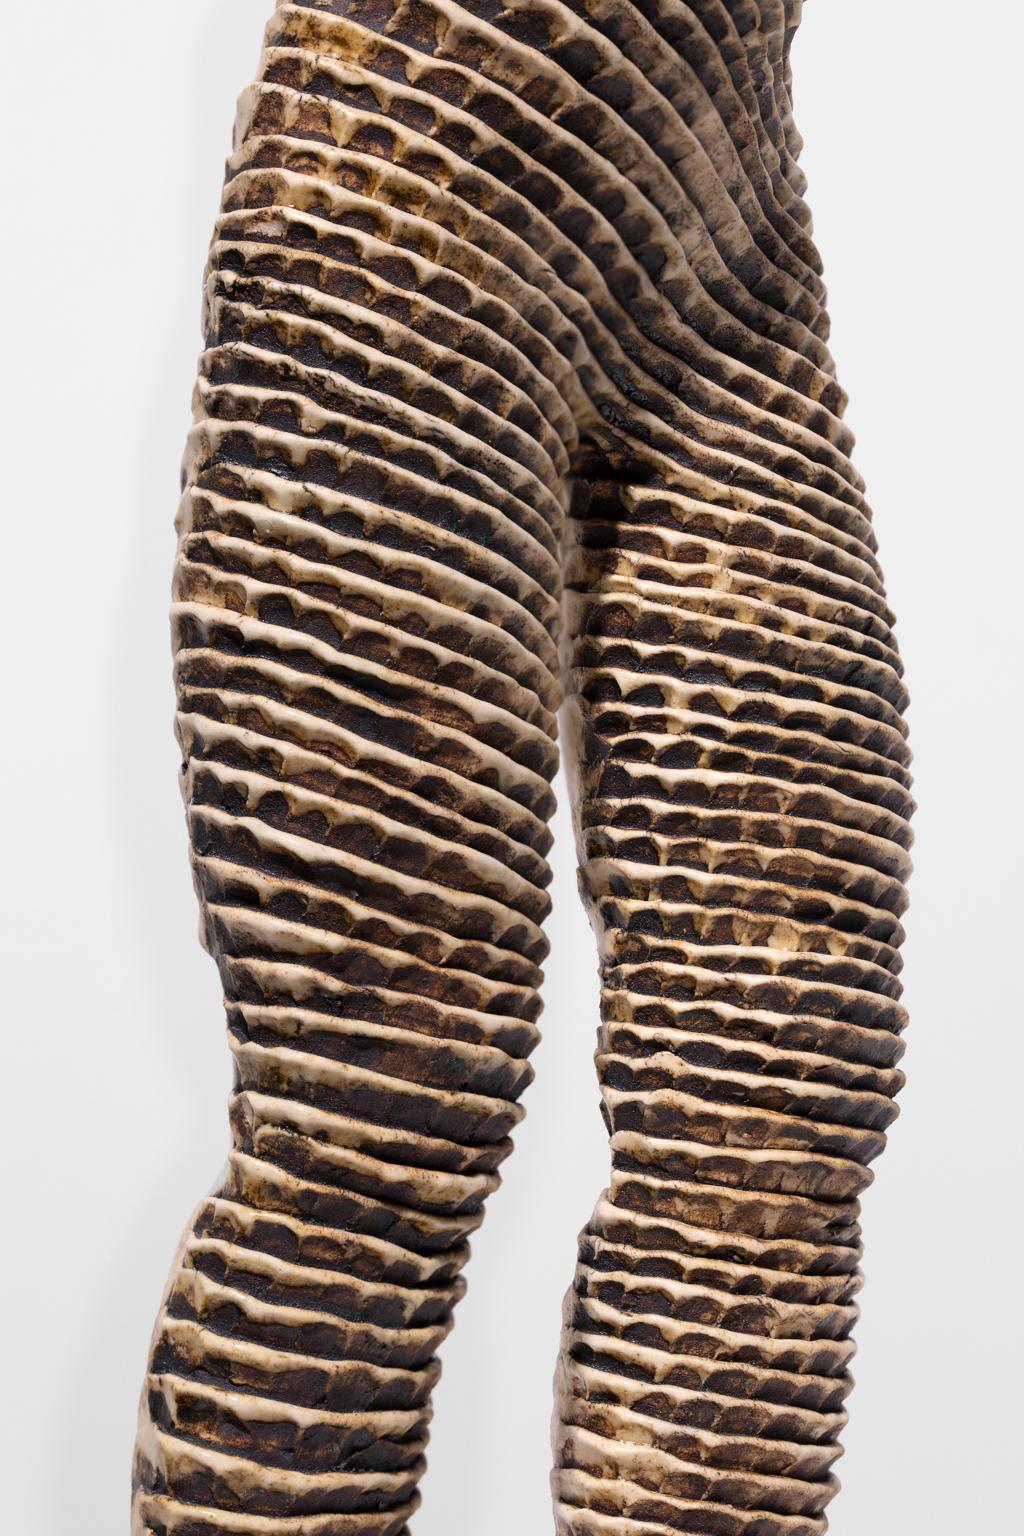 Michele Oka Doner Stoneware Figurines Female Torso w/Legs Phallic Shaped Spear 7